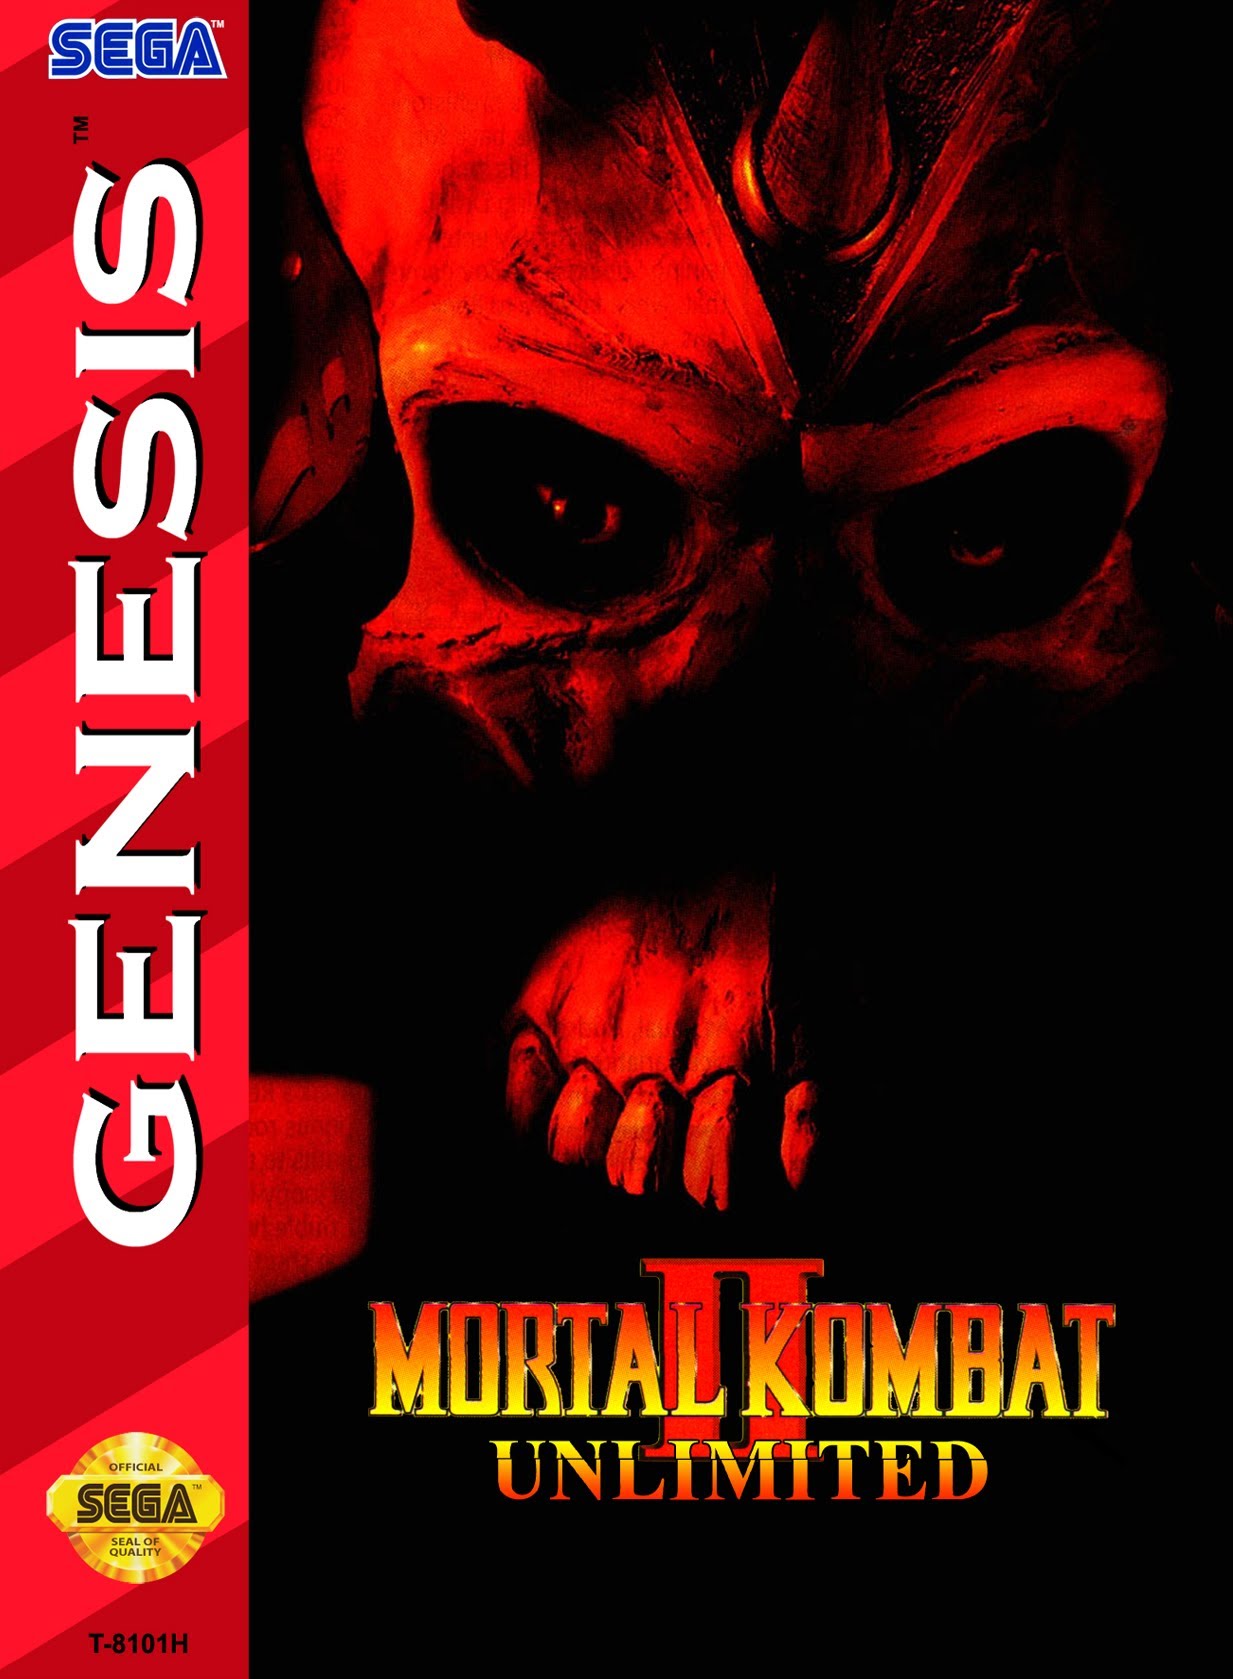 Mortal Kombat II Pics, Video Game Collection